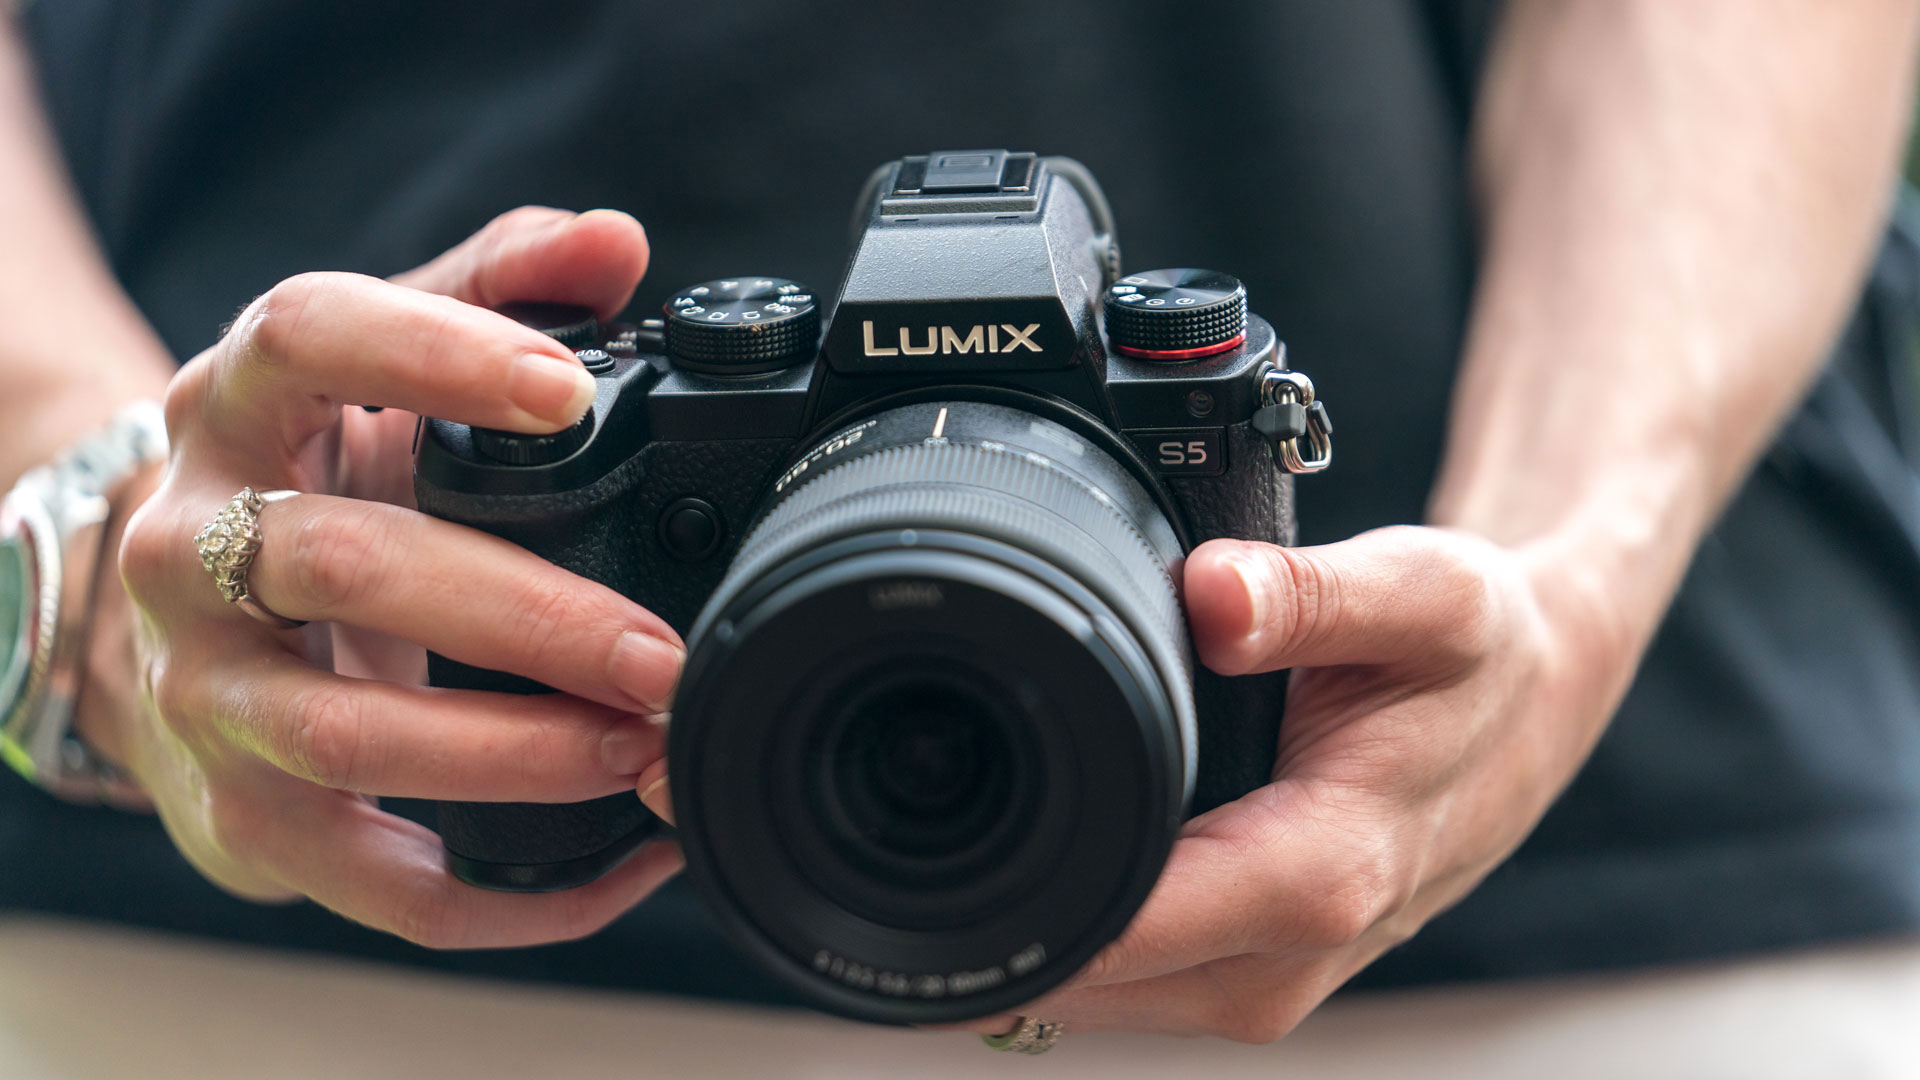 Best 4K camera: Panasonic Lumix S5